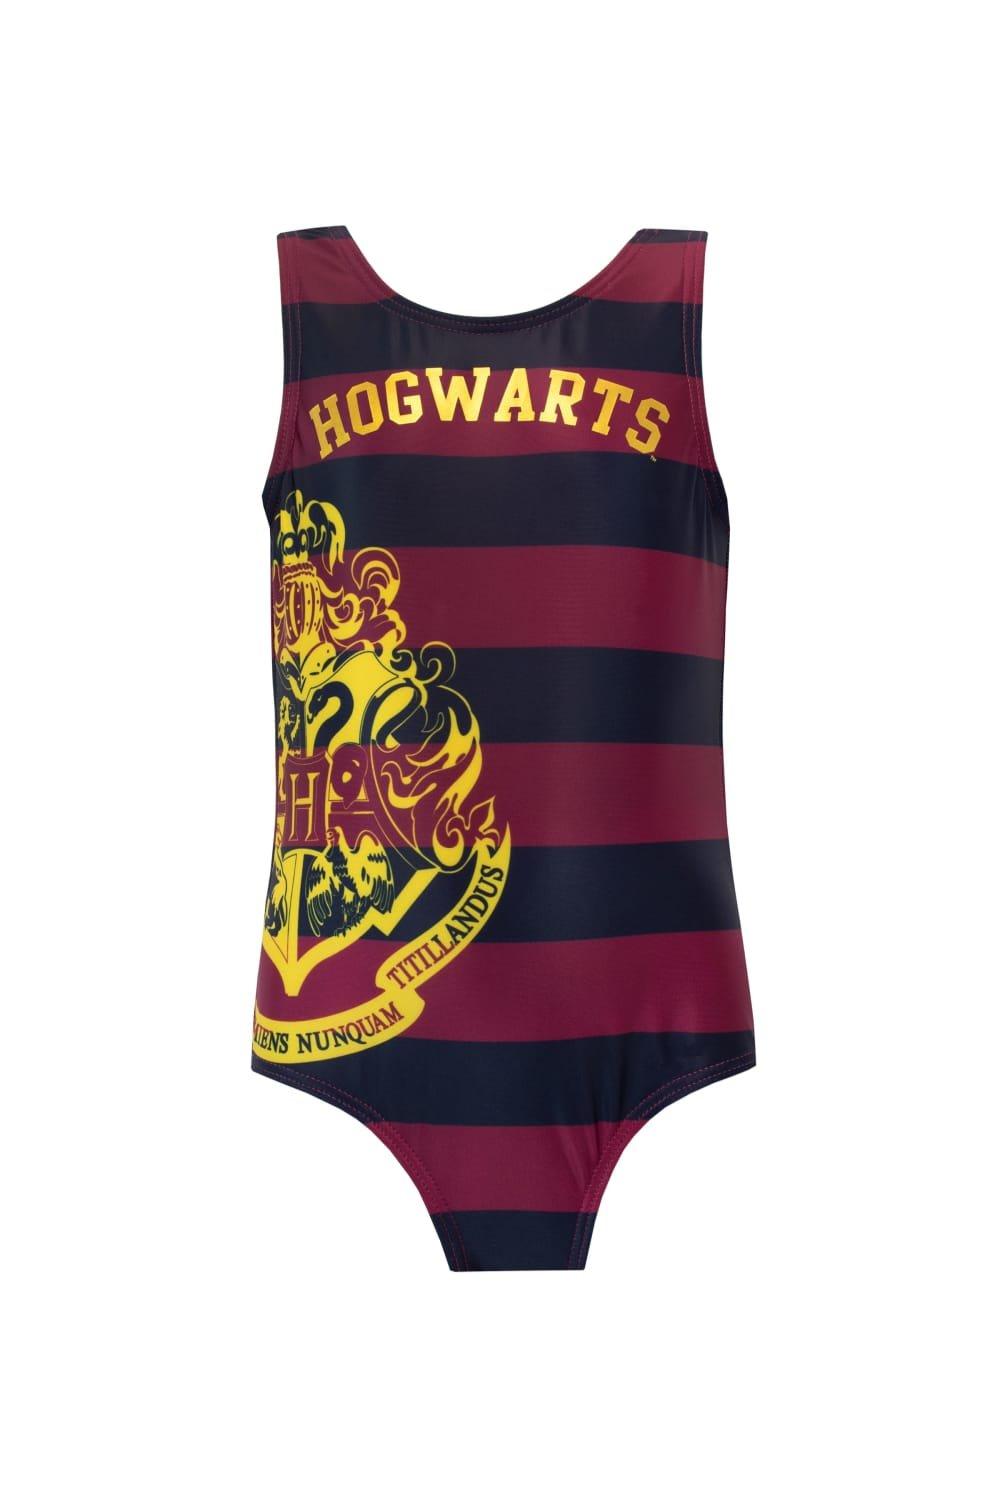 Hogwarts Crest Stripe Swimsuit